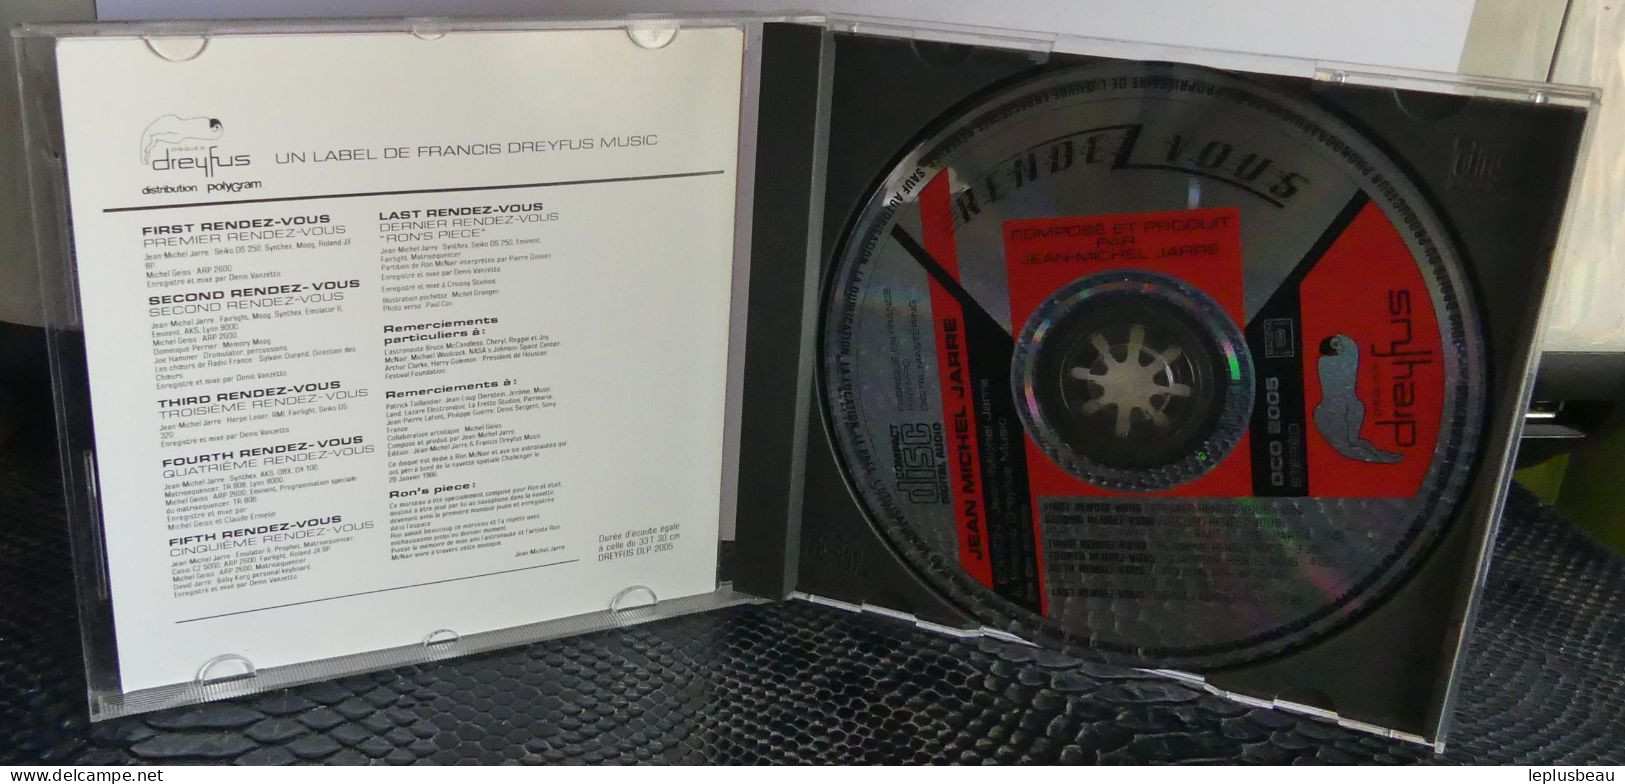 CD Jean Michel Jarre - Strumentali